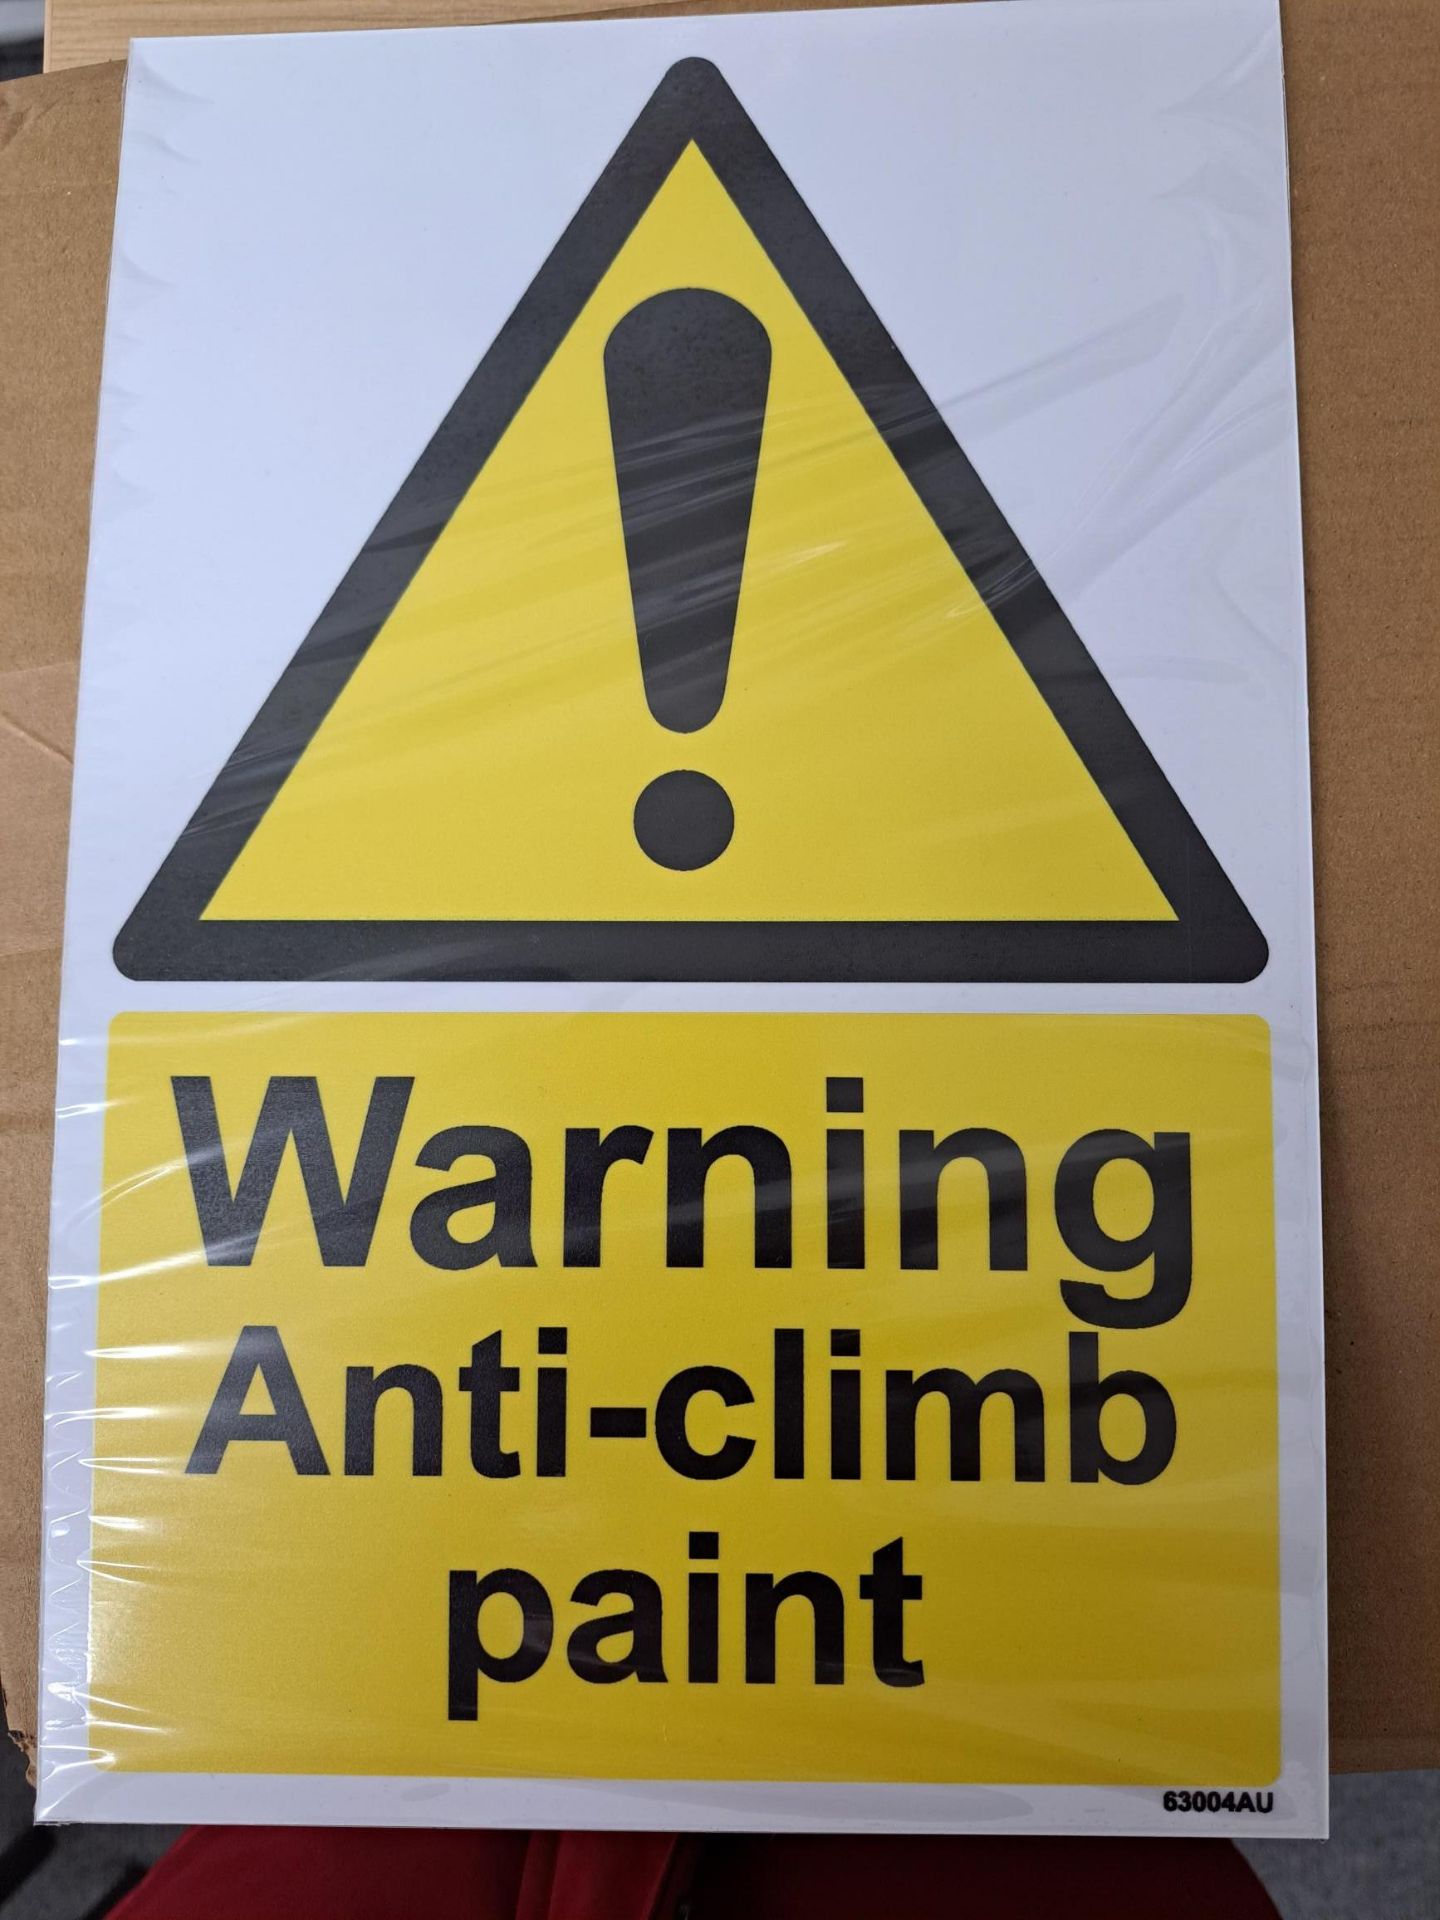 WARNING SIGNS - WARNING ANTI-CLIMB PAINT - QUANTITY 25